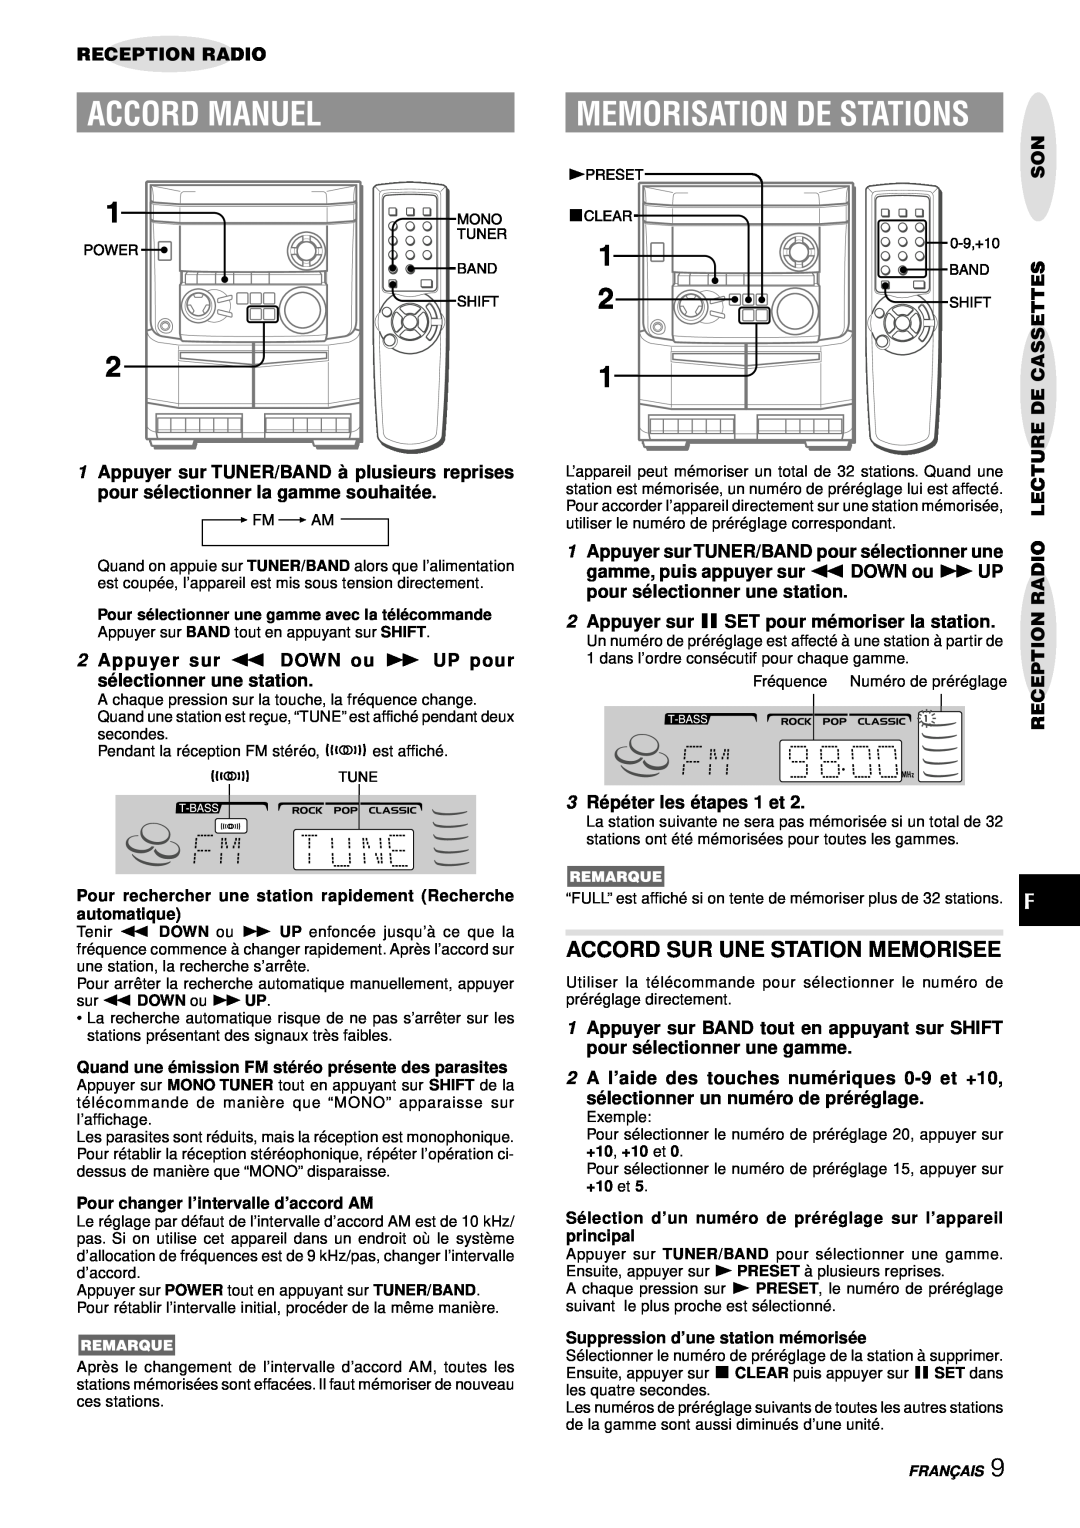 Aiwa NSX-AJ14 Accord Manuel, Memorisation De Stations, Accord Sur Une Station Memorisee, Reception Radio, Decassettes 